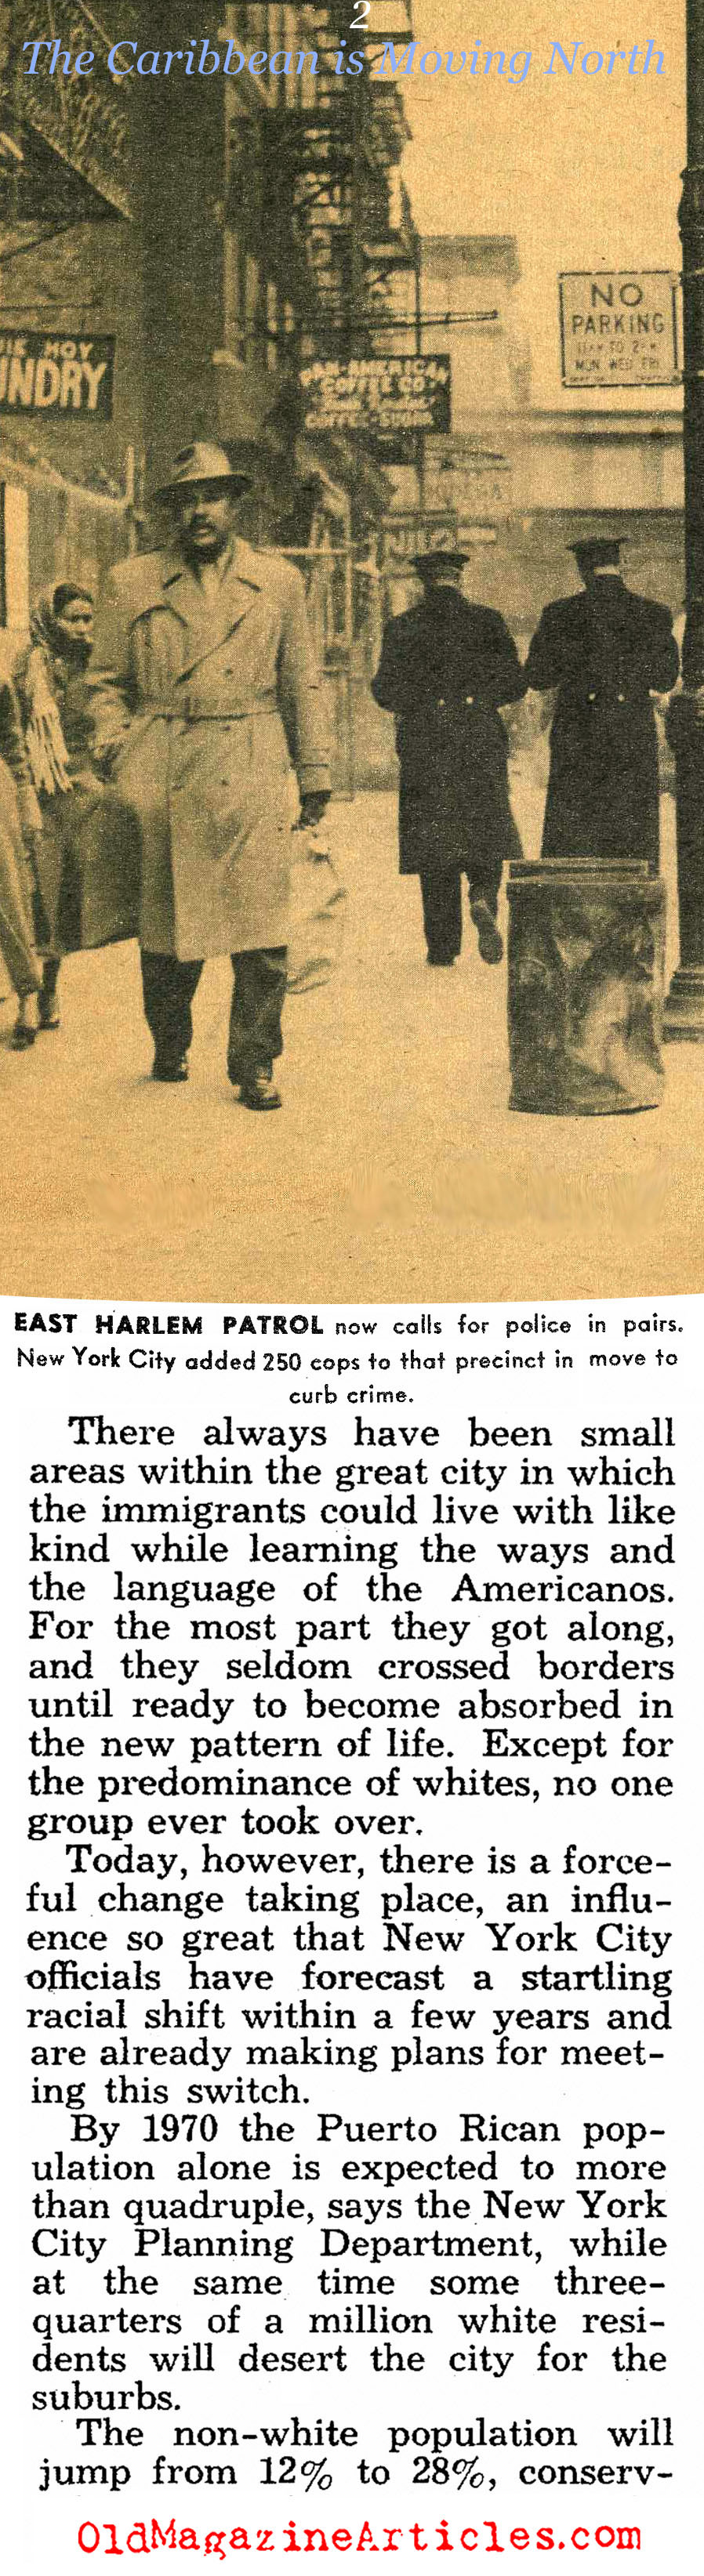 Puerto Ricans Arrive (Pic Magazine, 1955)